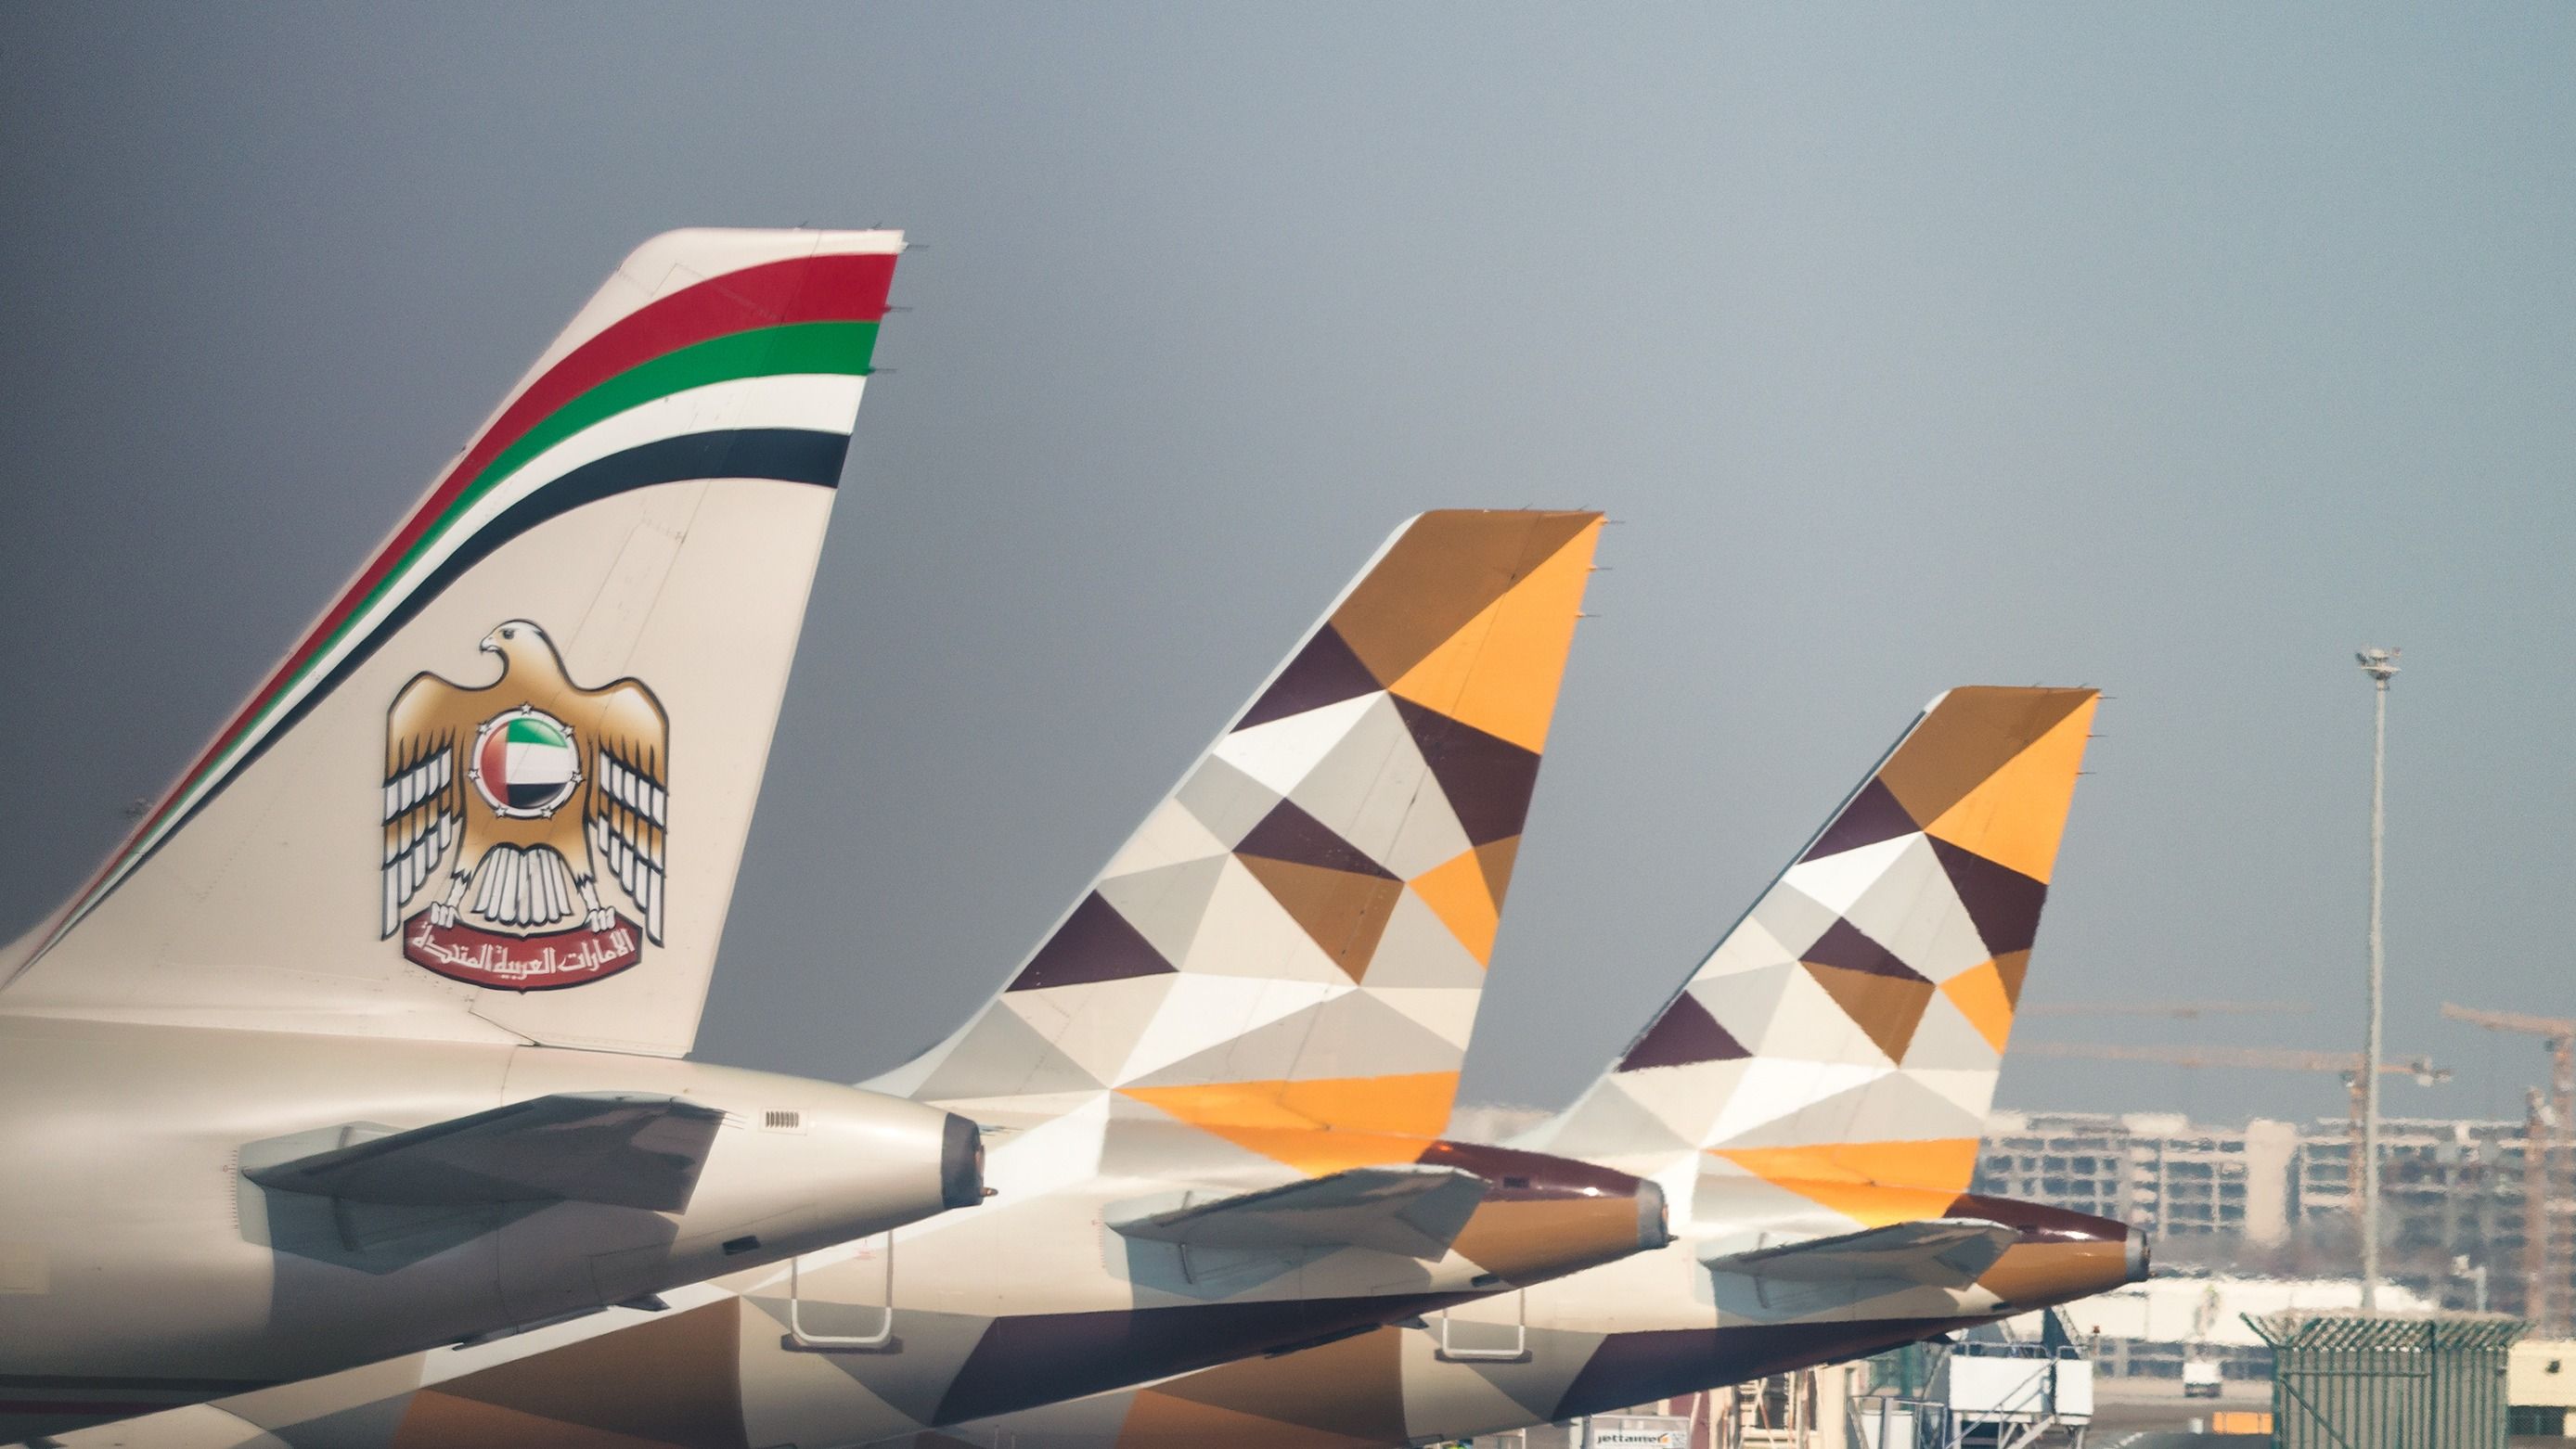 Etihad Airways Aircraft at Abu Dhabi International Airport.